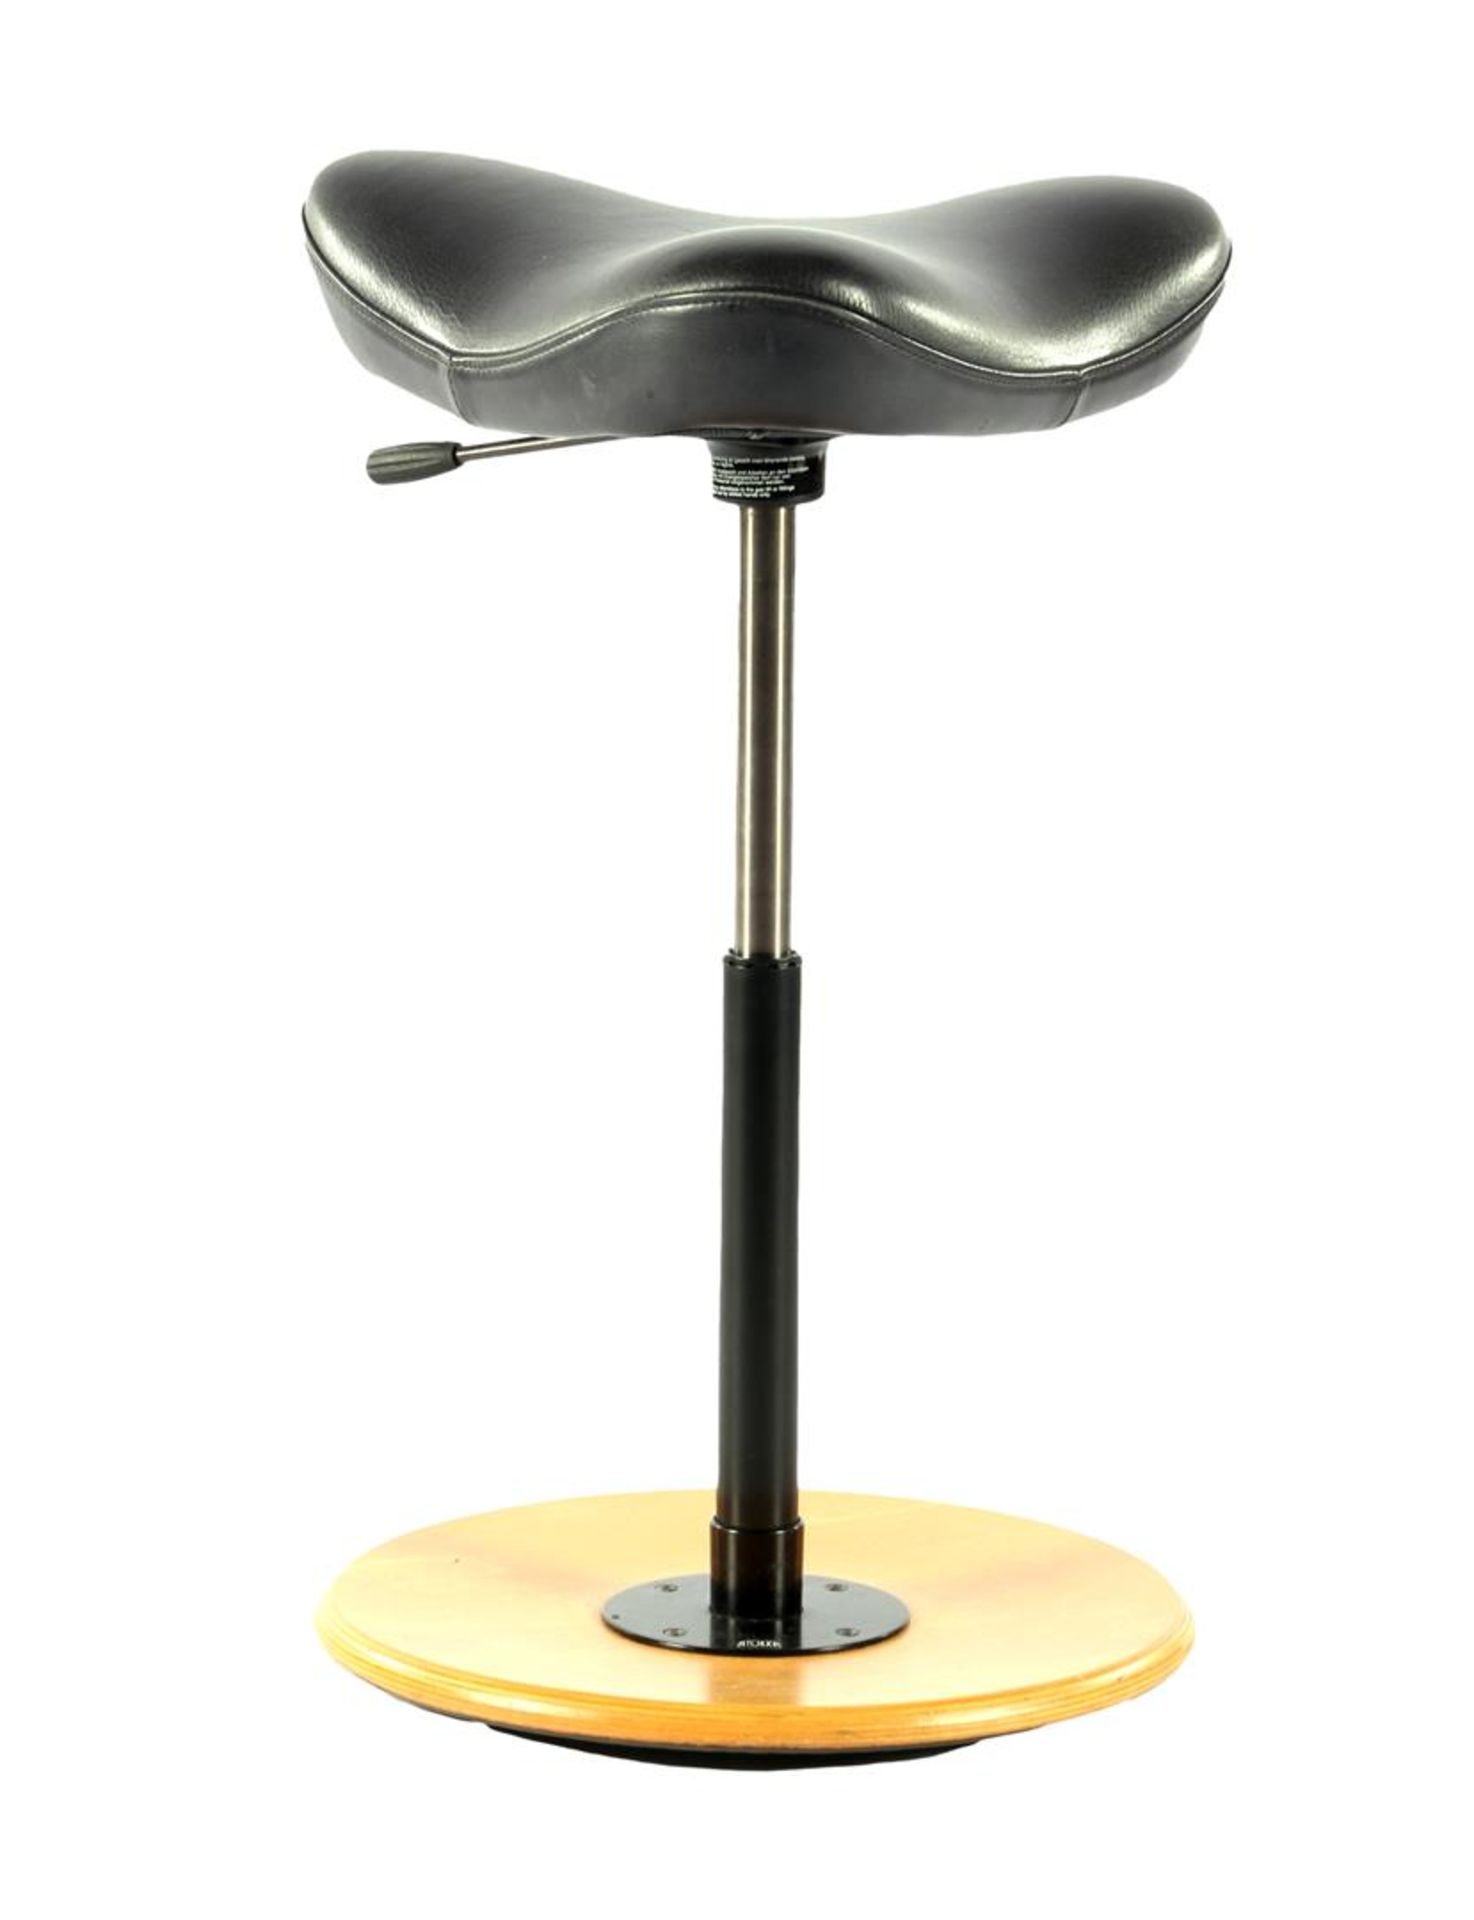 Ergonomic adjustable stool, Stokke Move Design, Norway 21st century, max 66 cm high